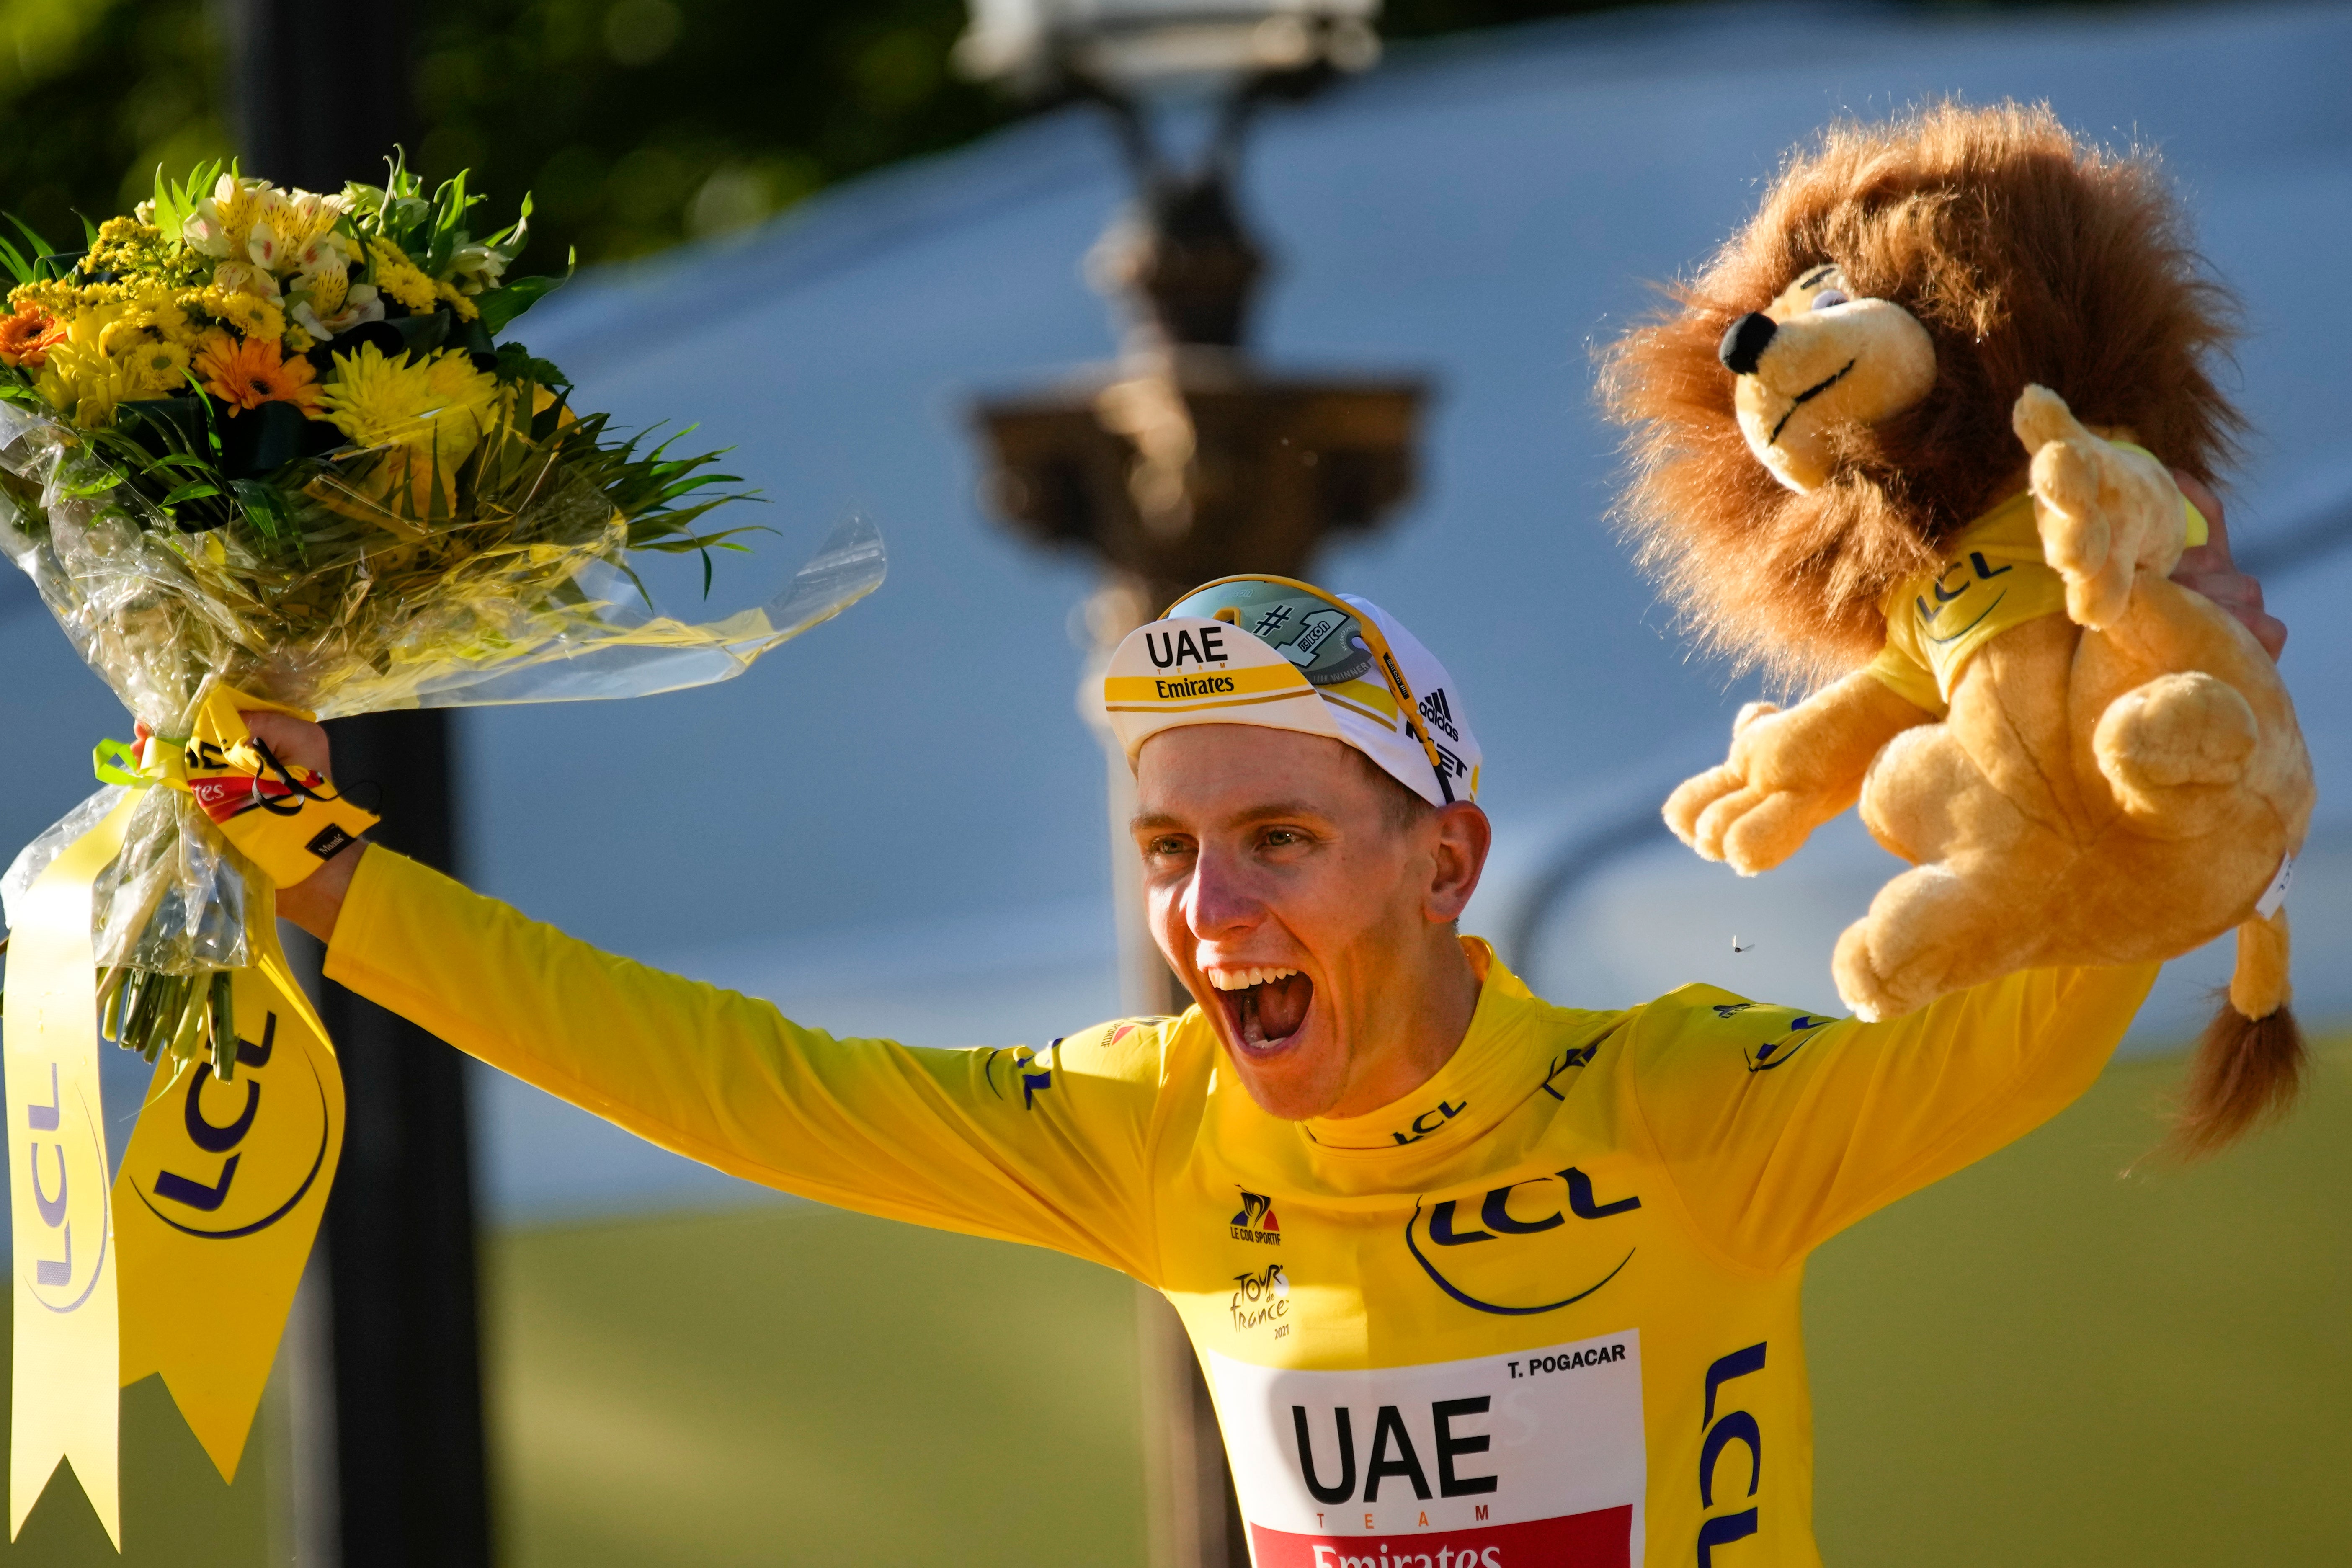 Pogacar celebrates winning the 2021 Tour de France